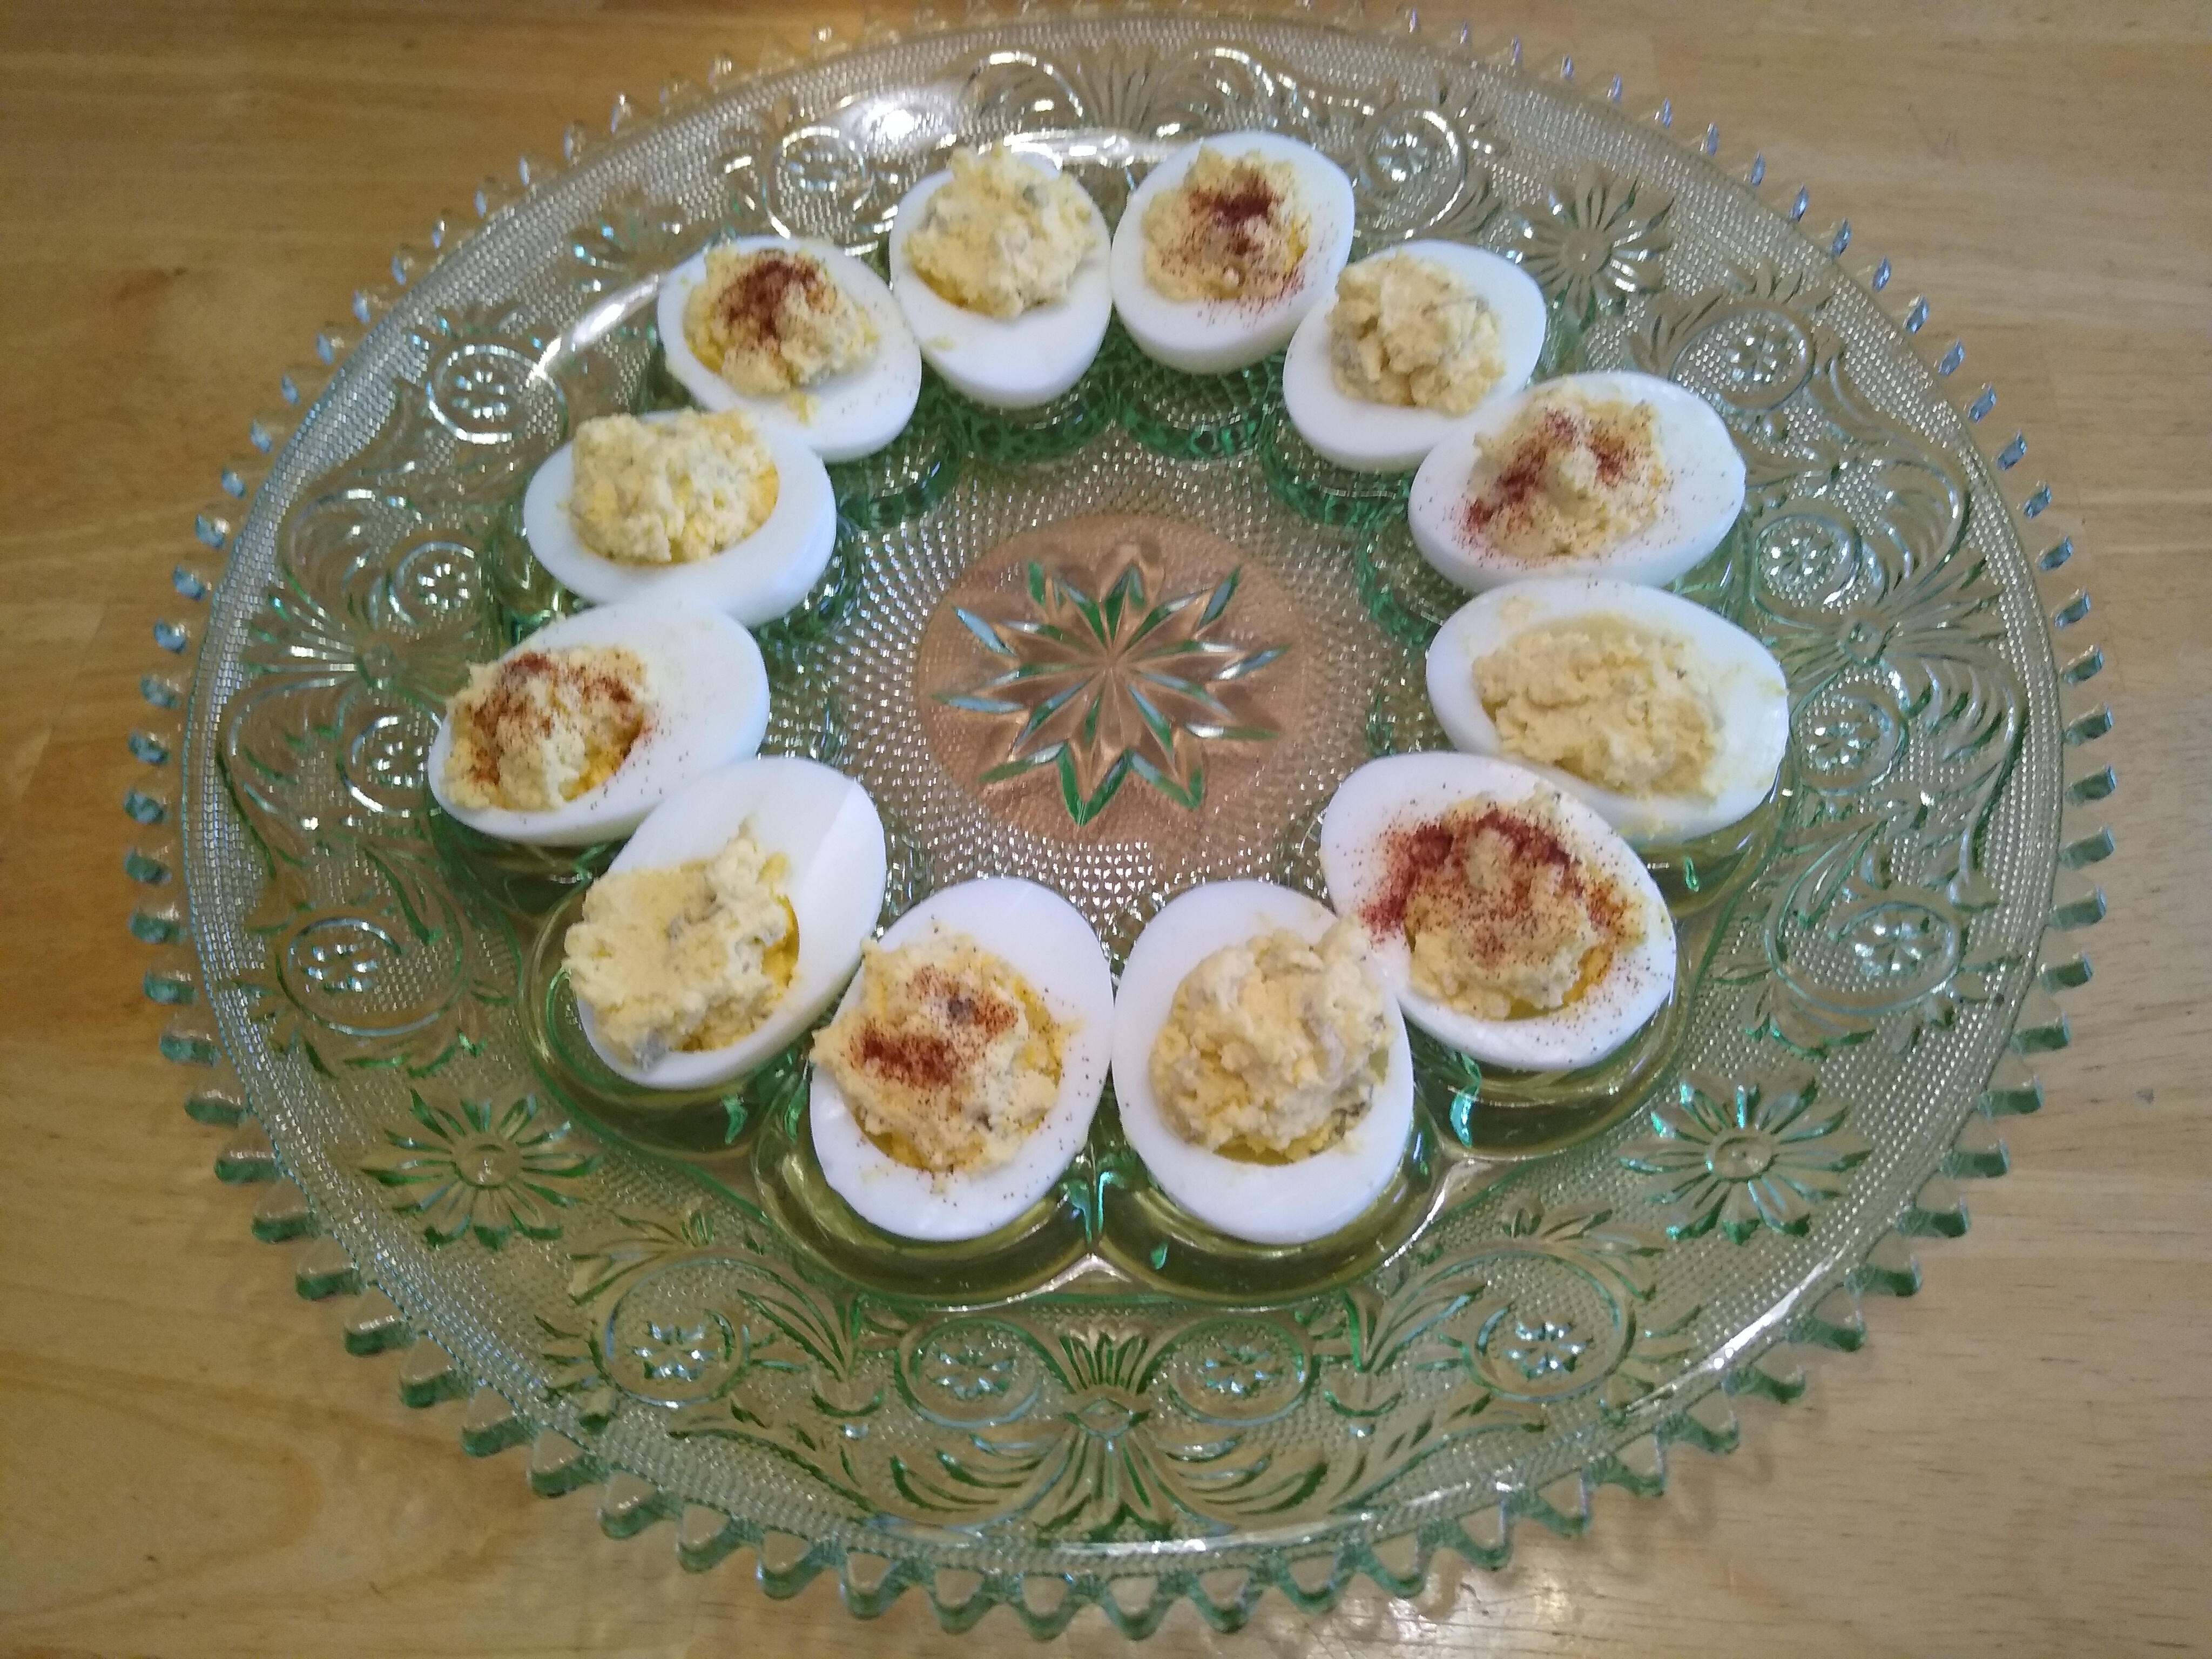 Lorna's Deviled Eggs